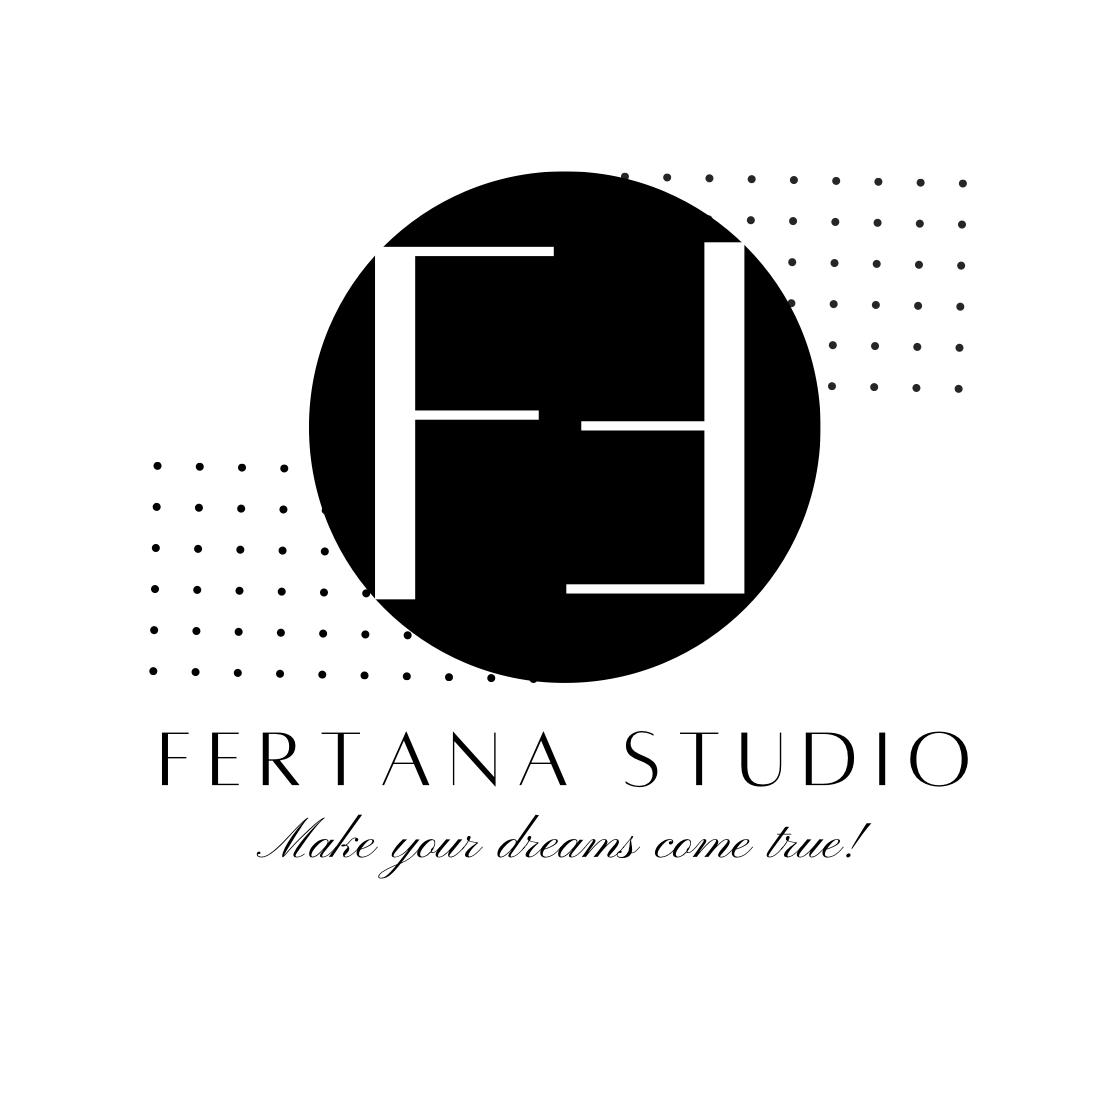 Fertana studio